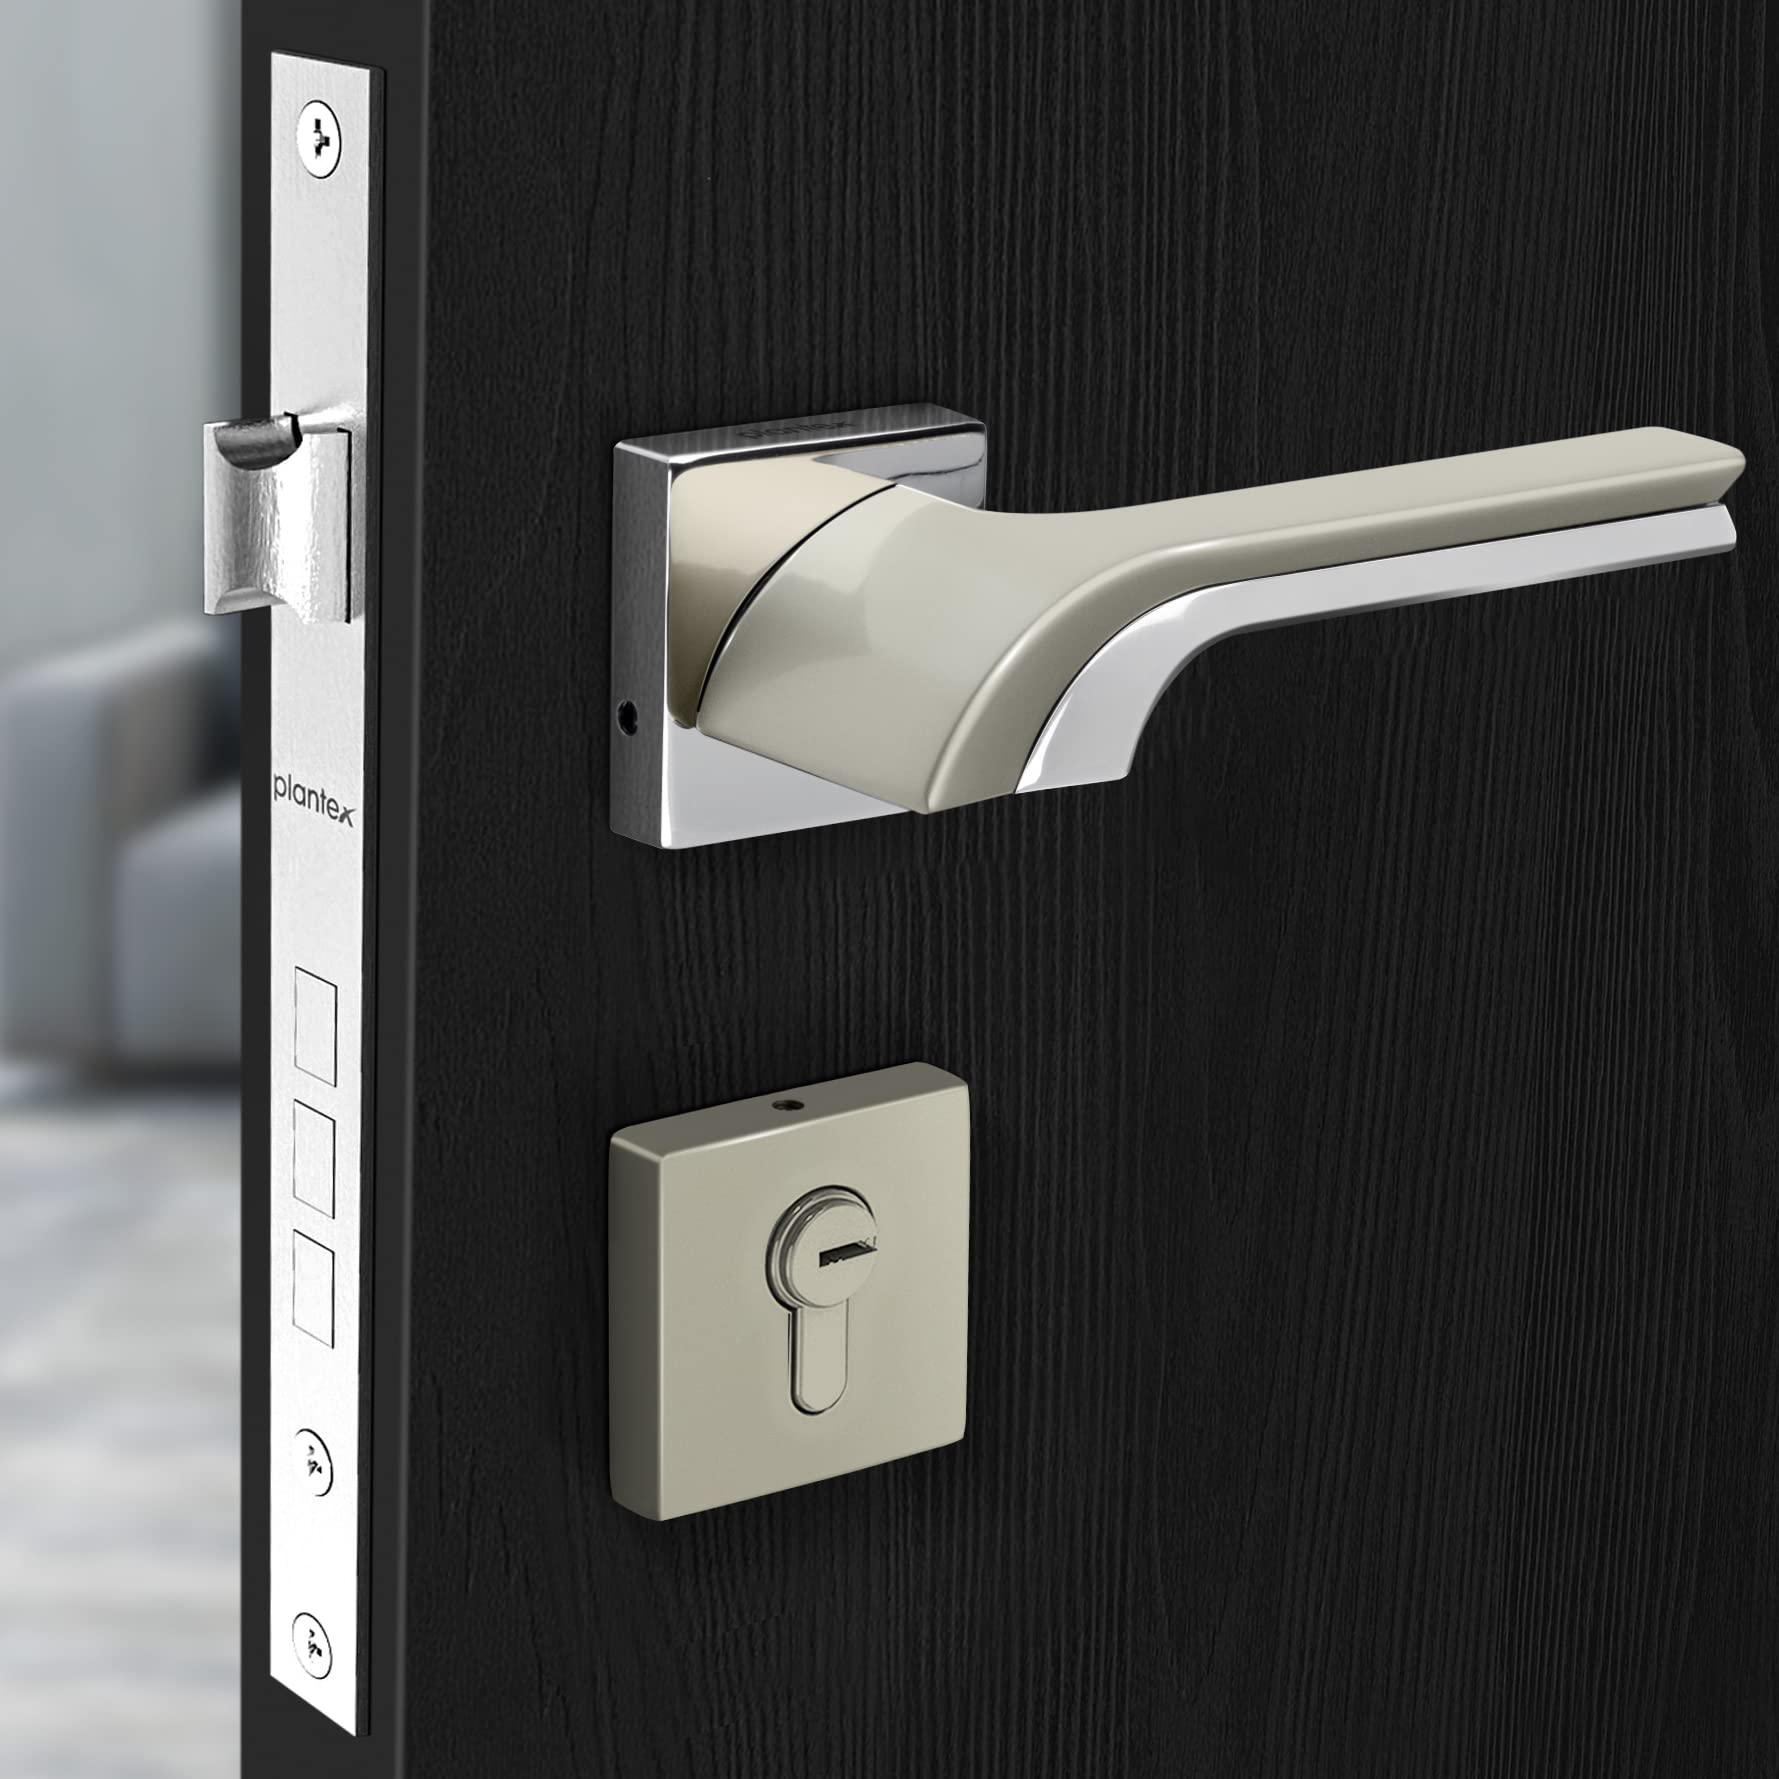 Plantex Door Lock 7094 7 Inch Handle Lock for Door 3 Keys/Mortise Lock for Home Office Hotel (Satin White & Chrome)